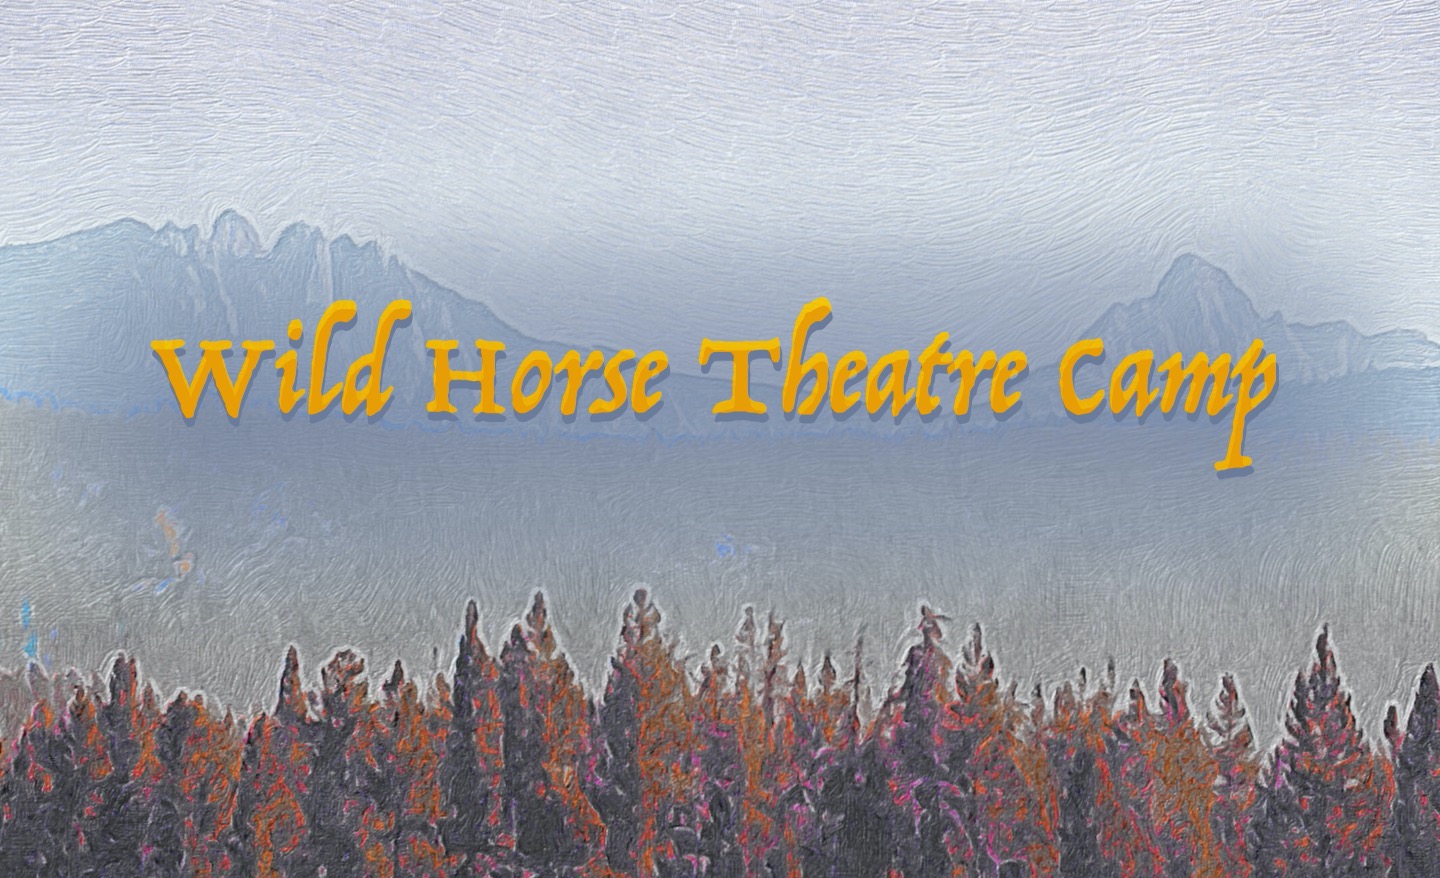 Wild Horse Theatre Camp 2021 @ Camp Marshall